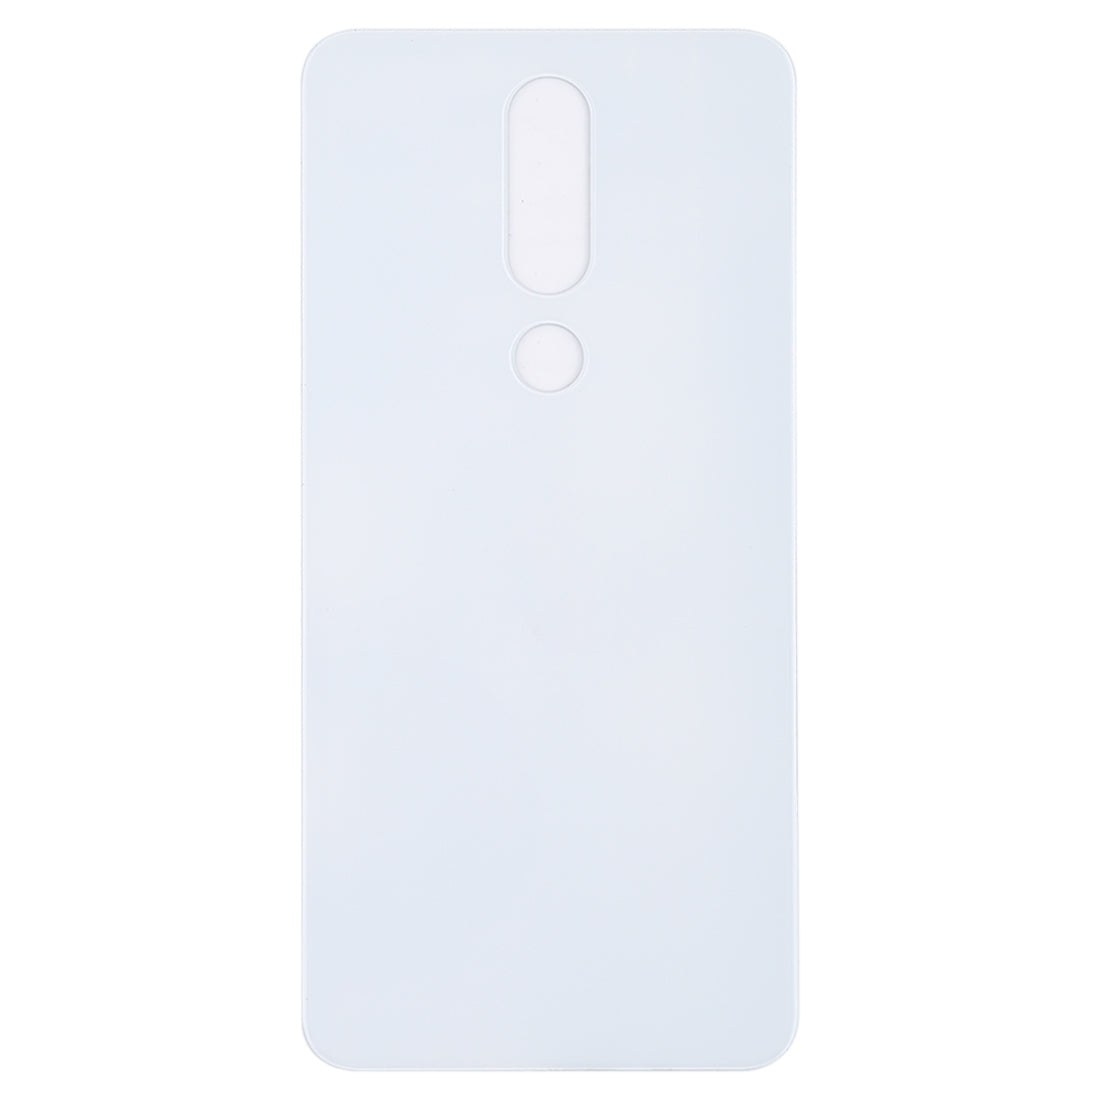 Tapa Bateria Back Cover Nokia 5.1 Plus X5 Blanco